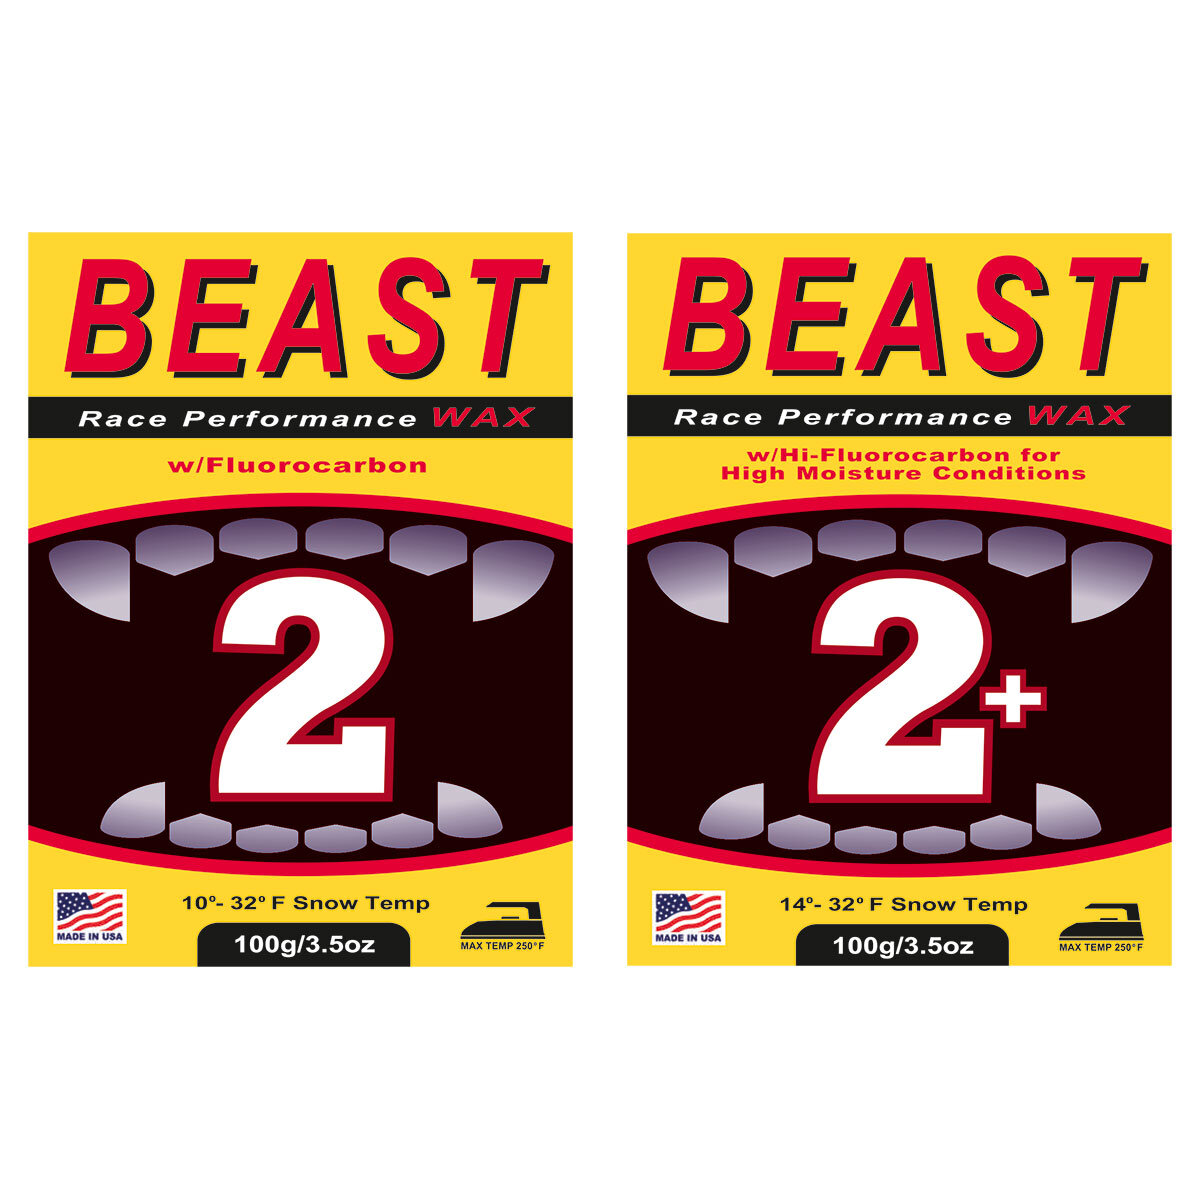 BEAST 2 Race Wax Images